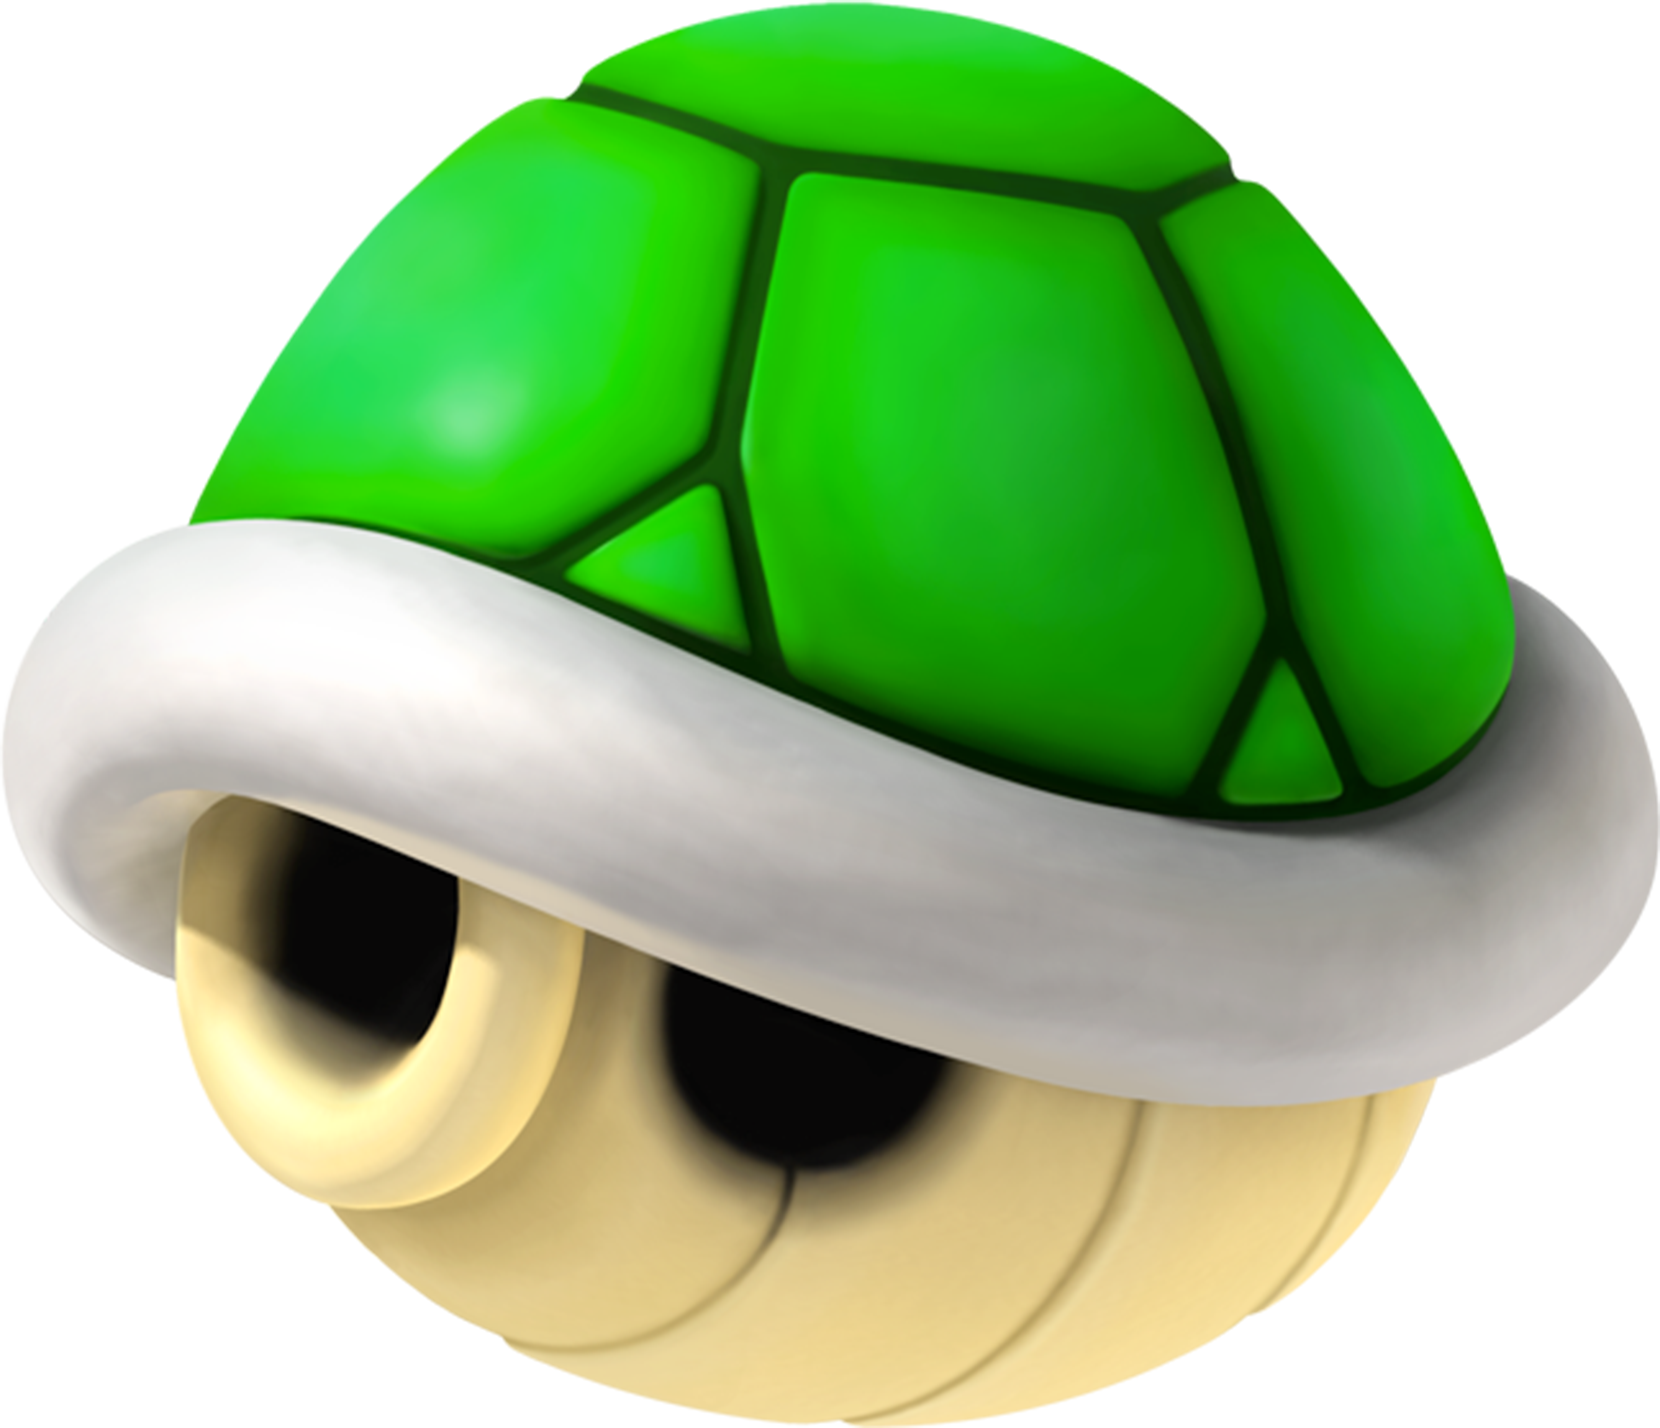 Green Shell - Green Shell Mario Kart (1660x1428)